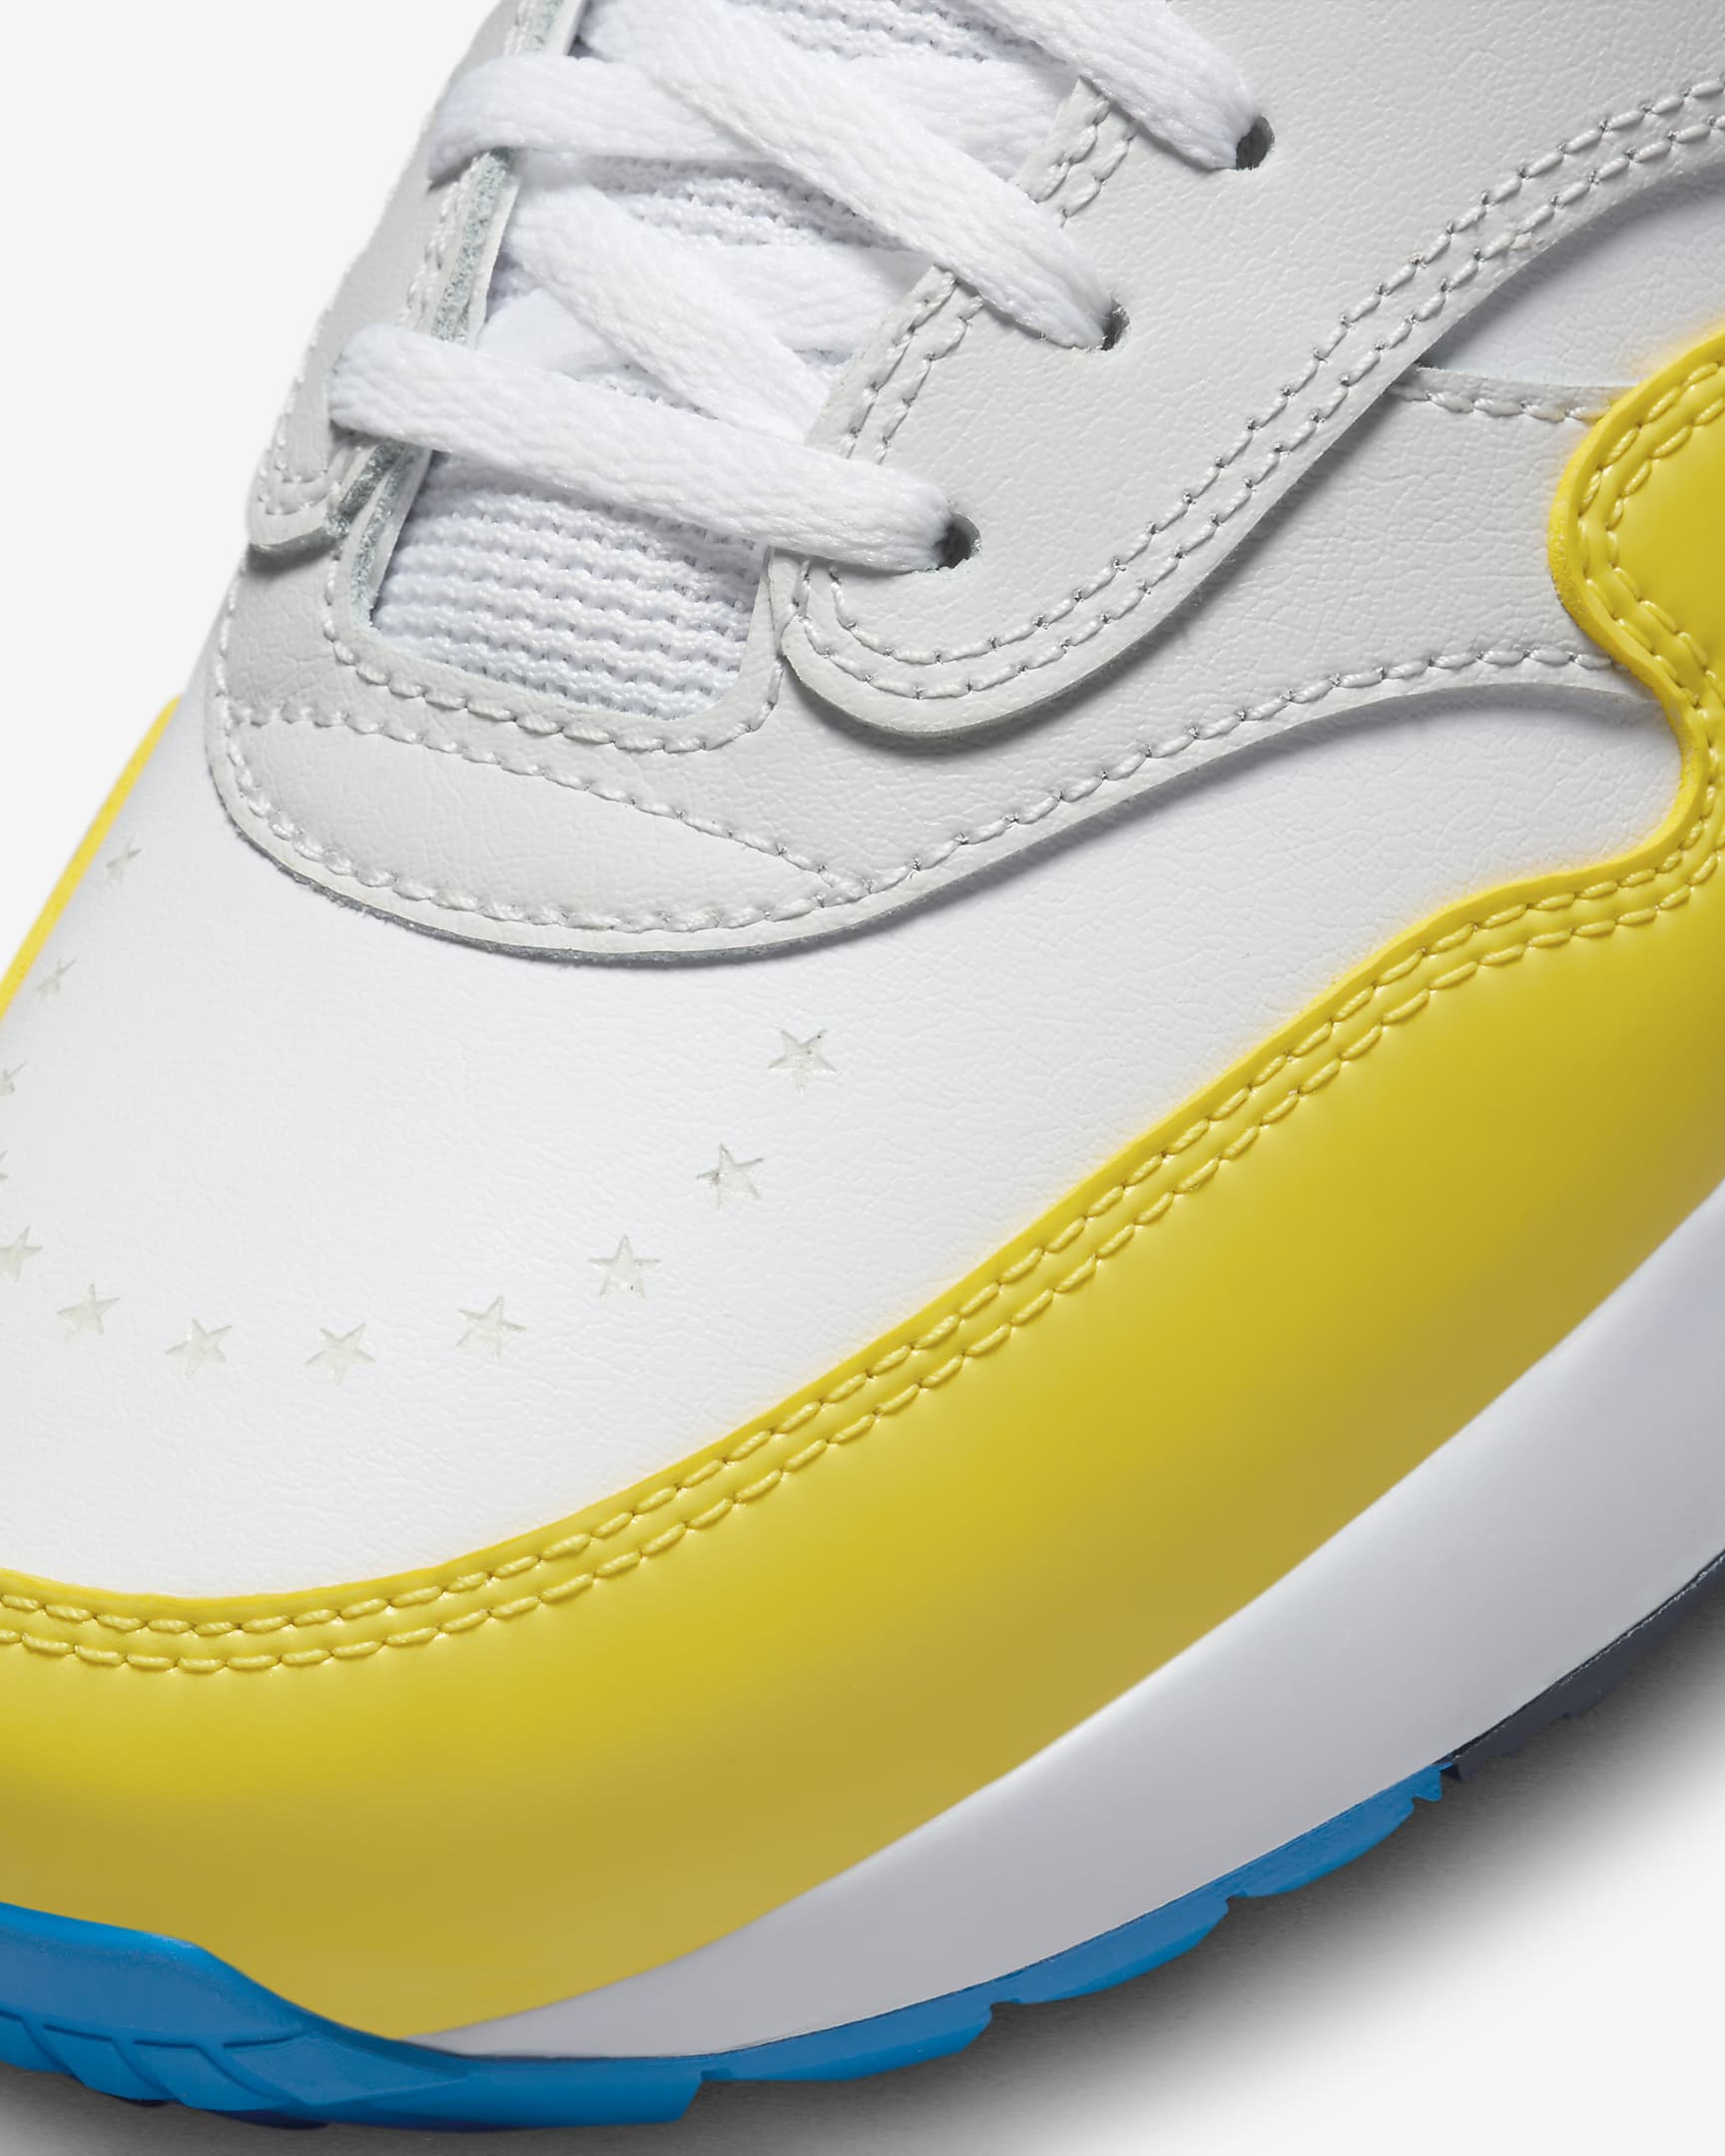 Scarpa da golf Nike Air Max 1 '86 OG G NRG – Uomo - Bianco/Tour Yellow/Photo Blue/Ossidiana